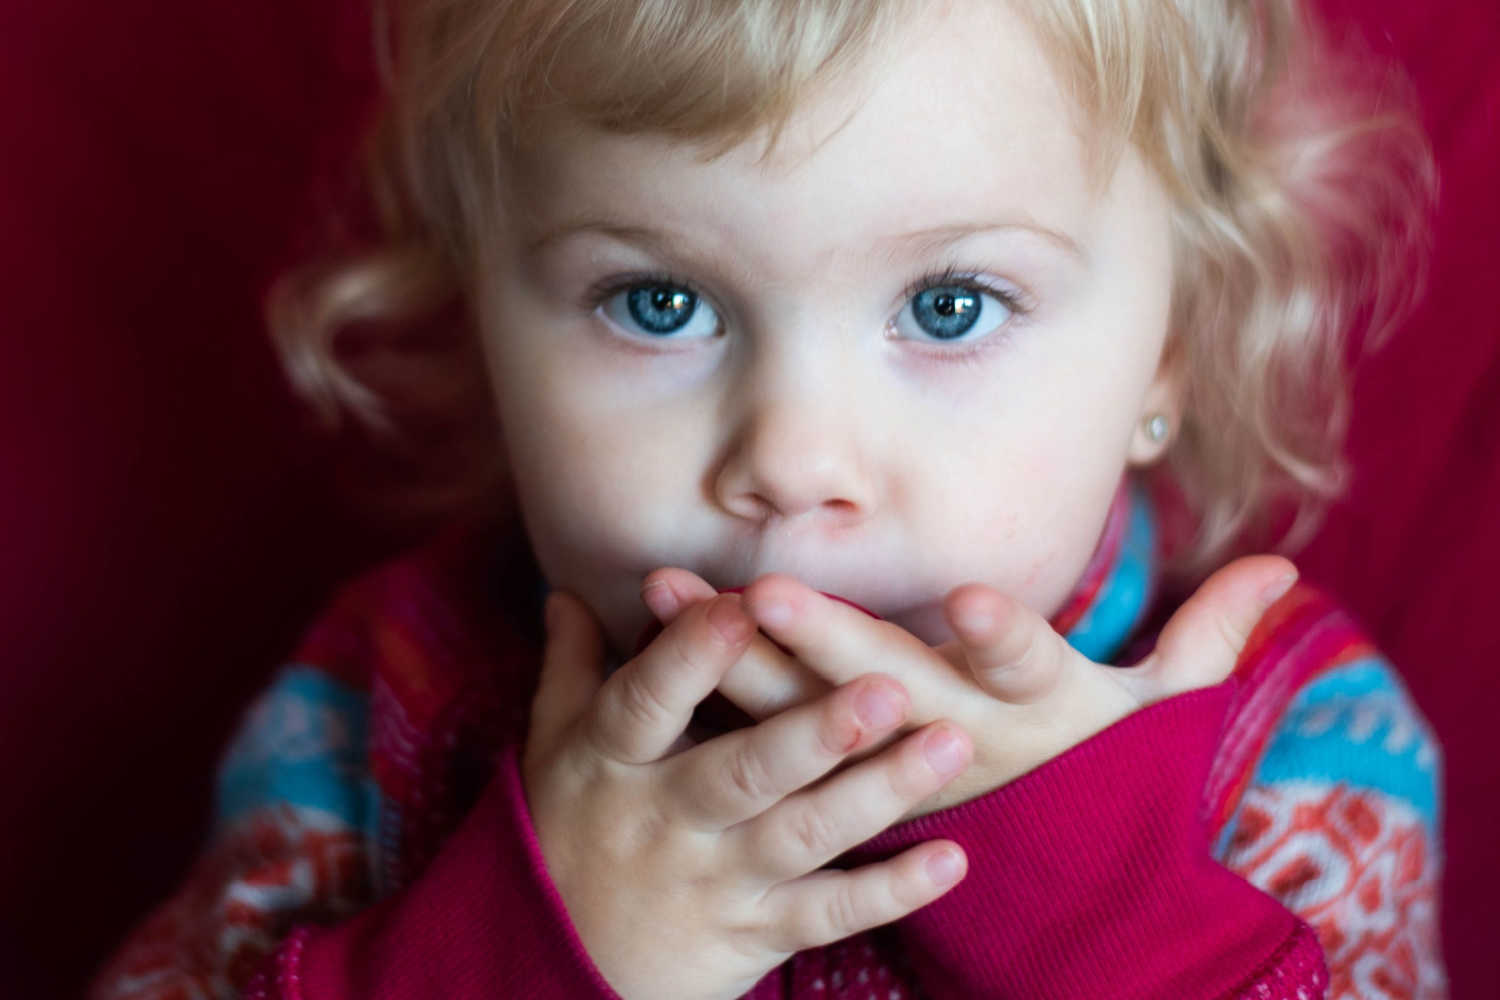 Symptoms of speech apraxia in toddlers